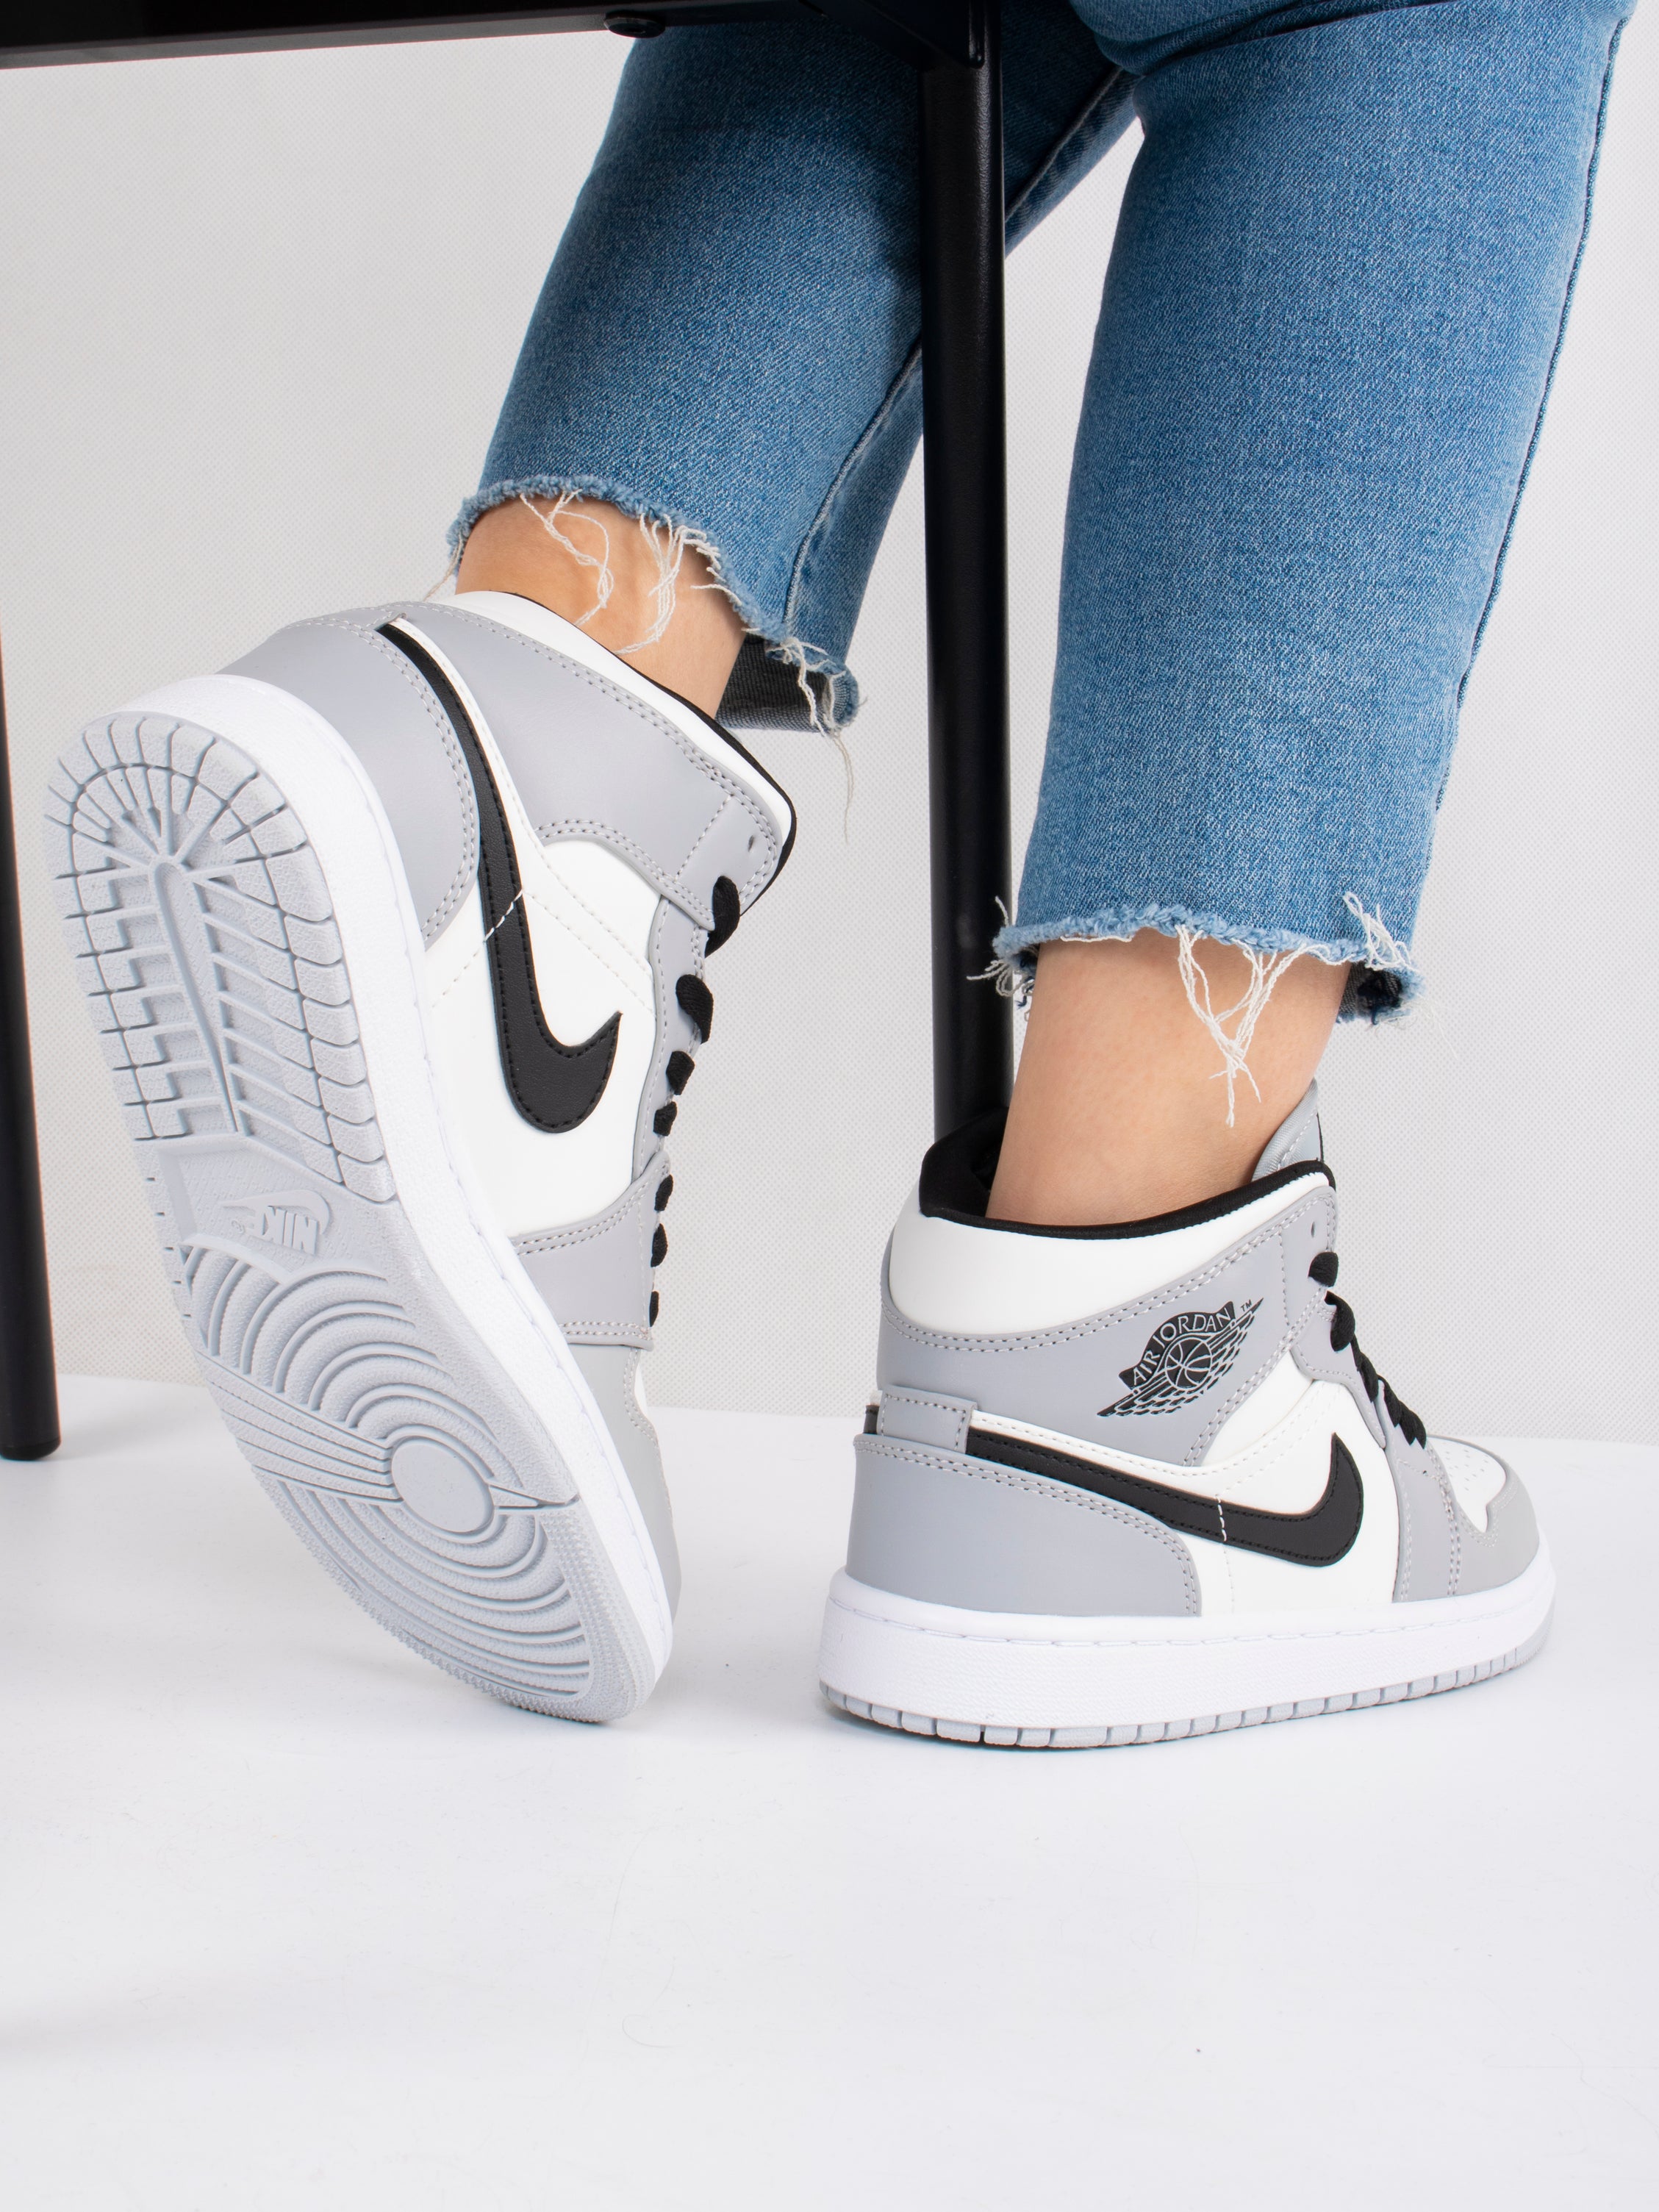 Nike Air Jordan 1 Mid trainers in grey/white